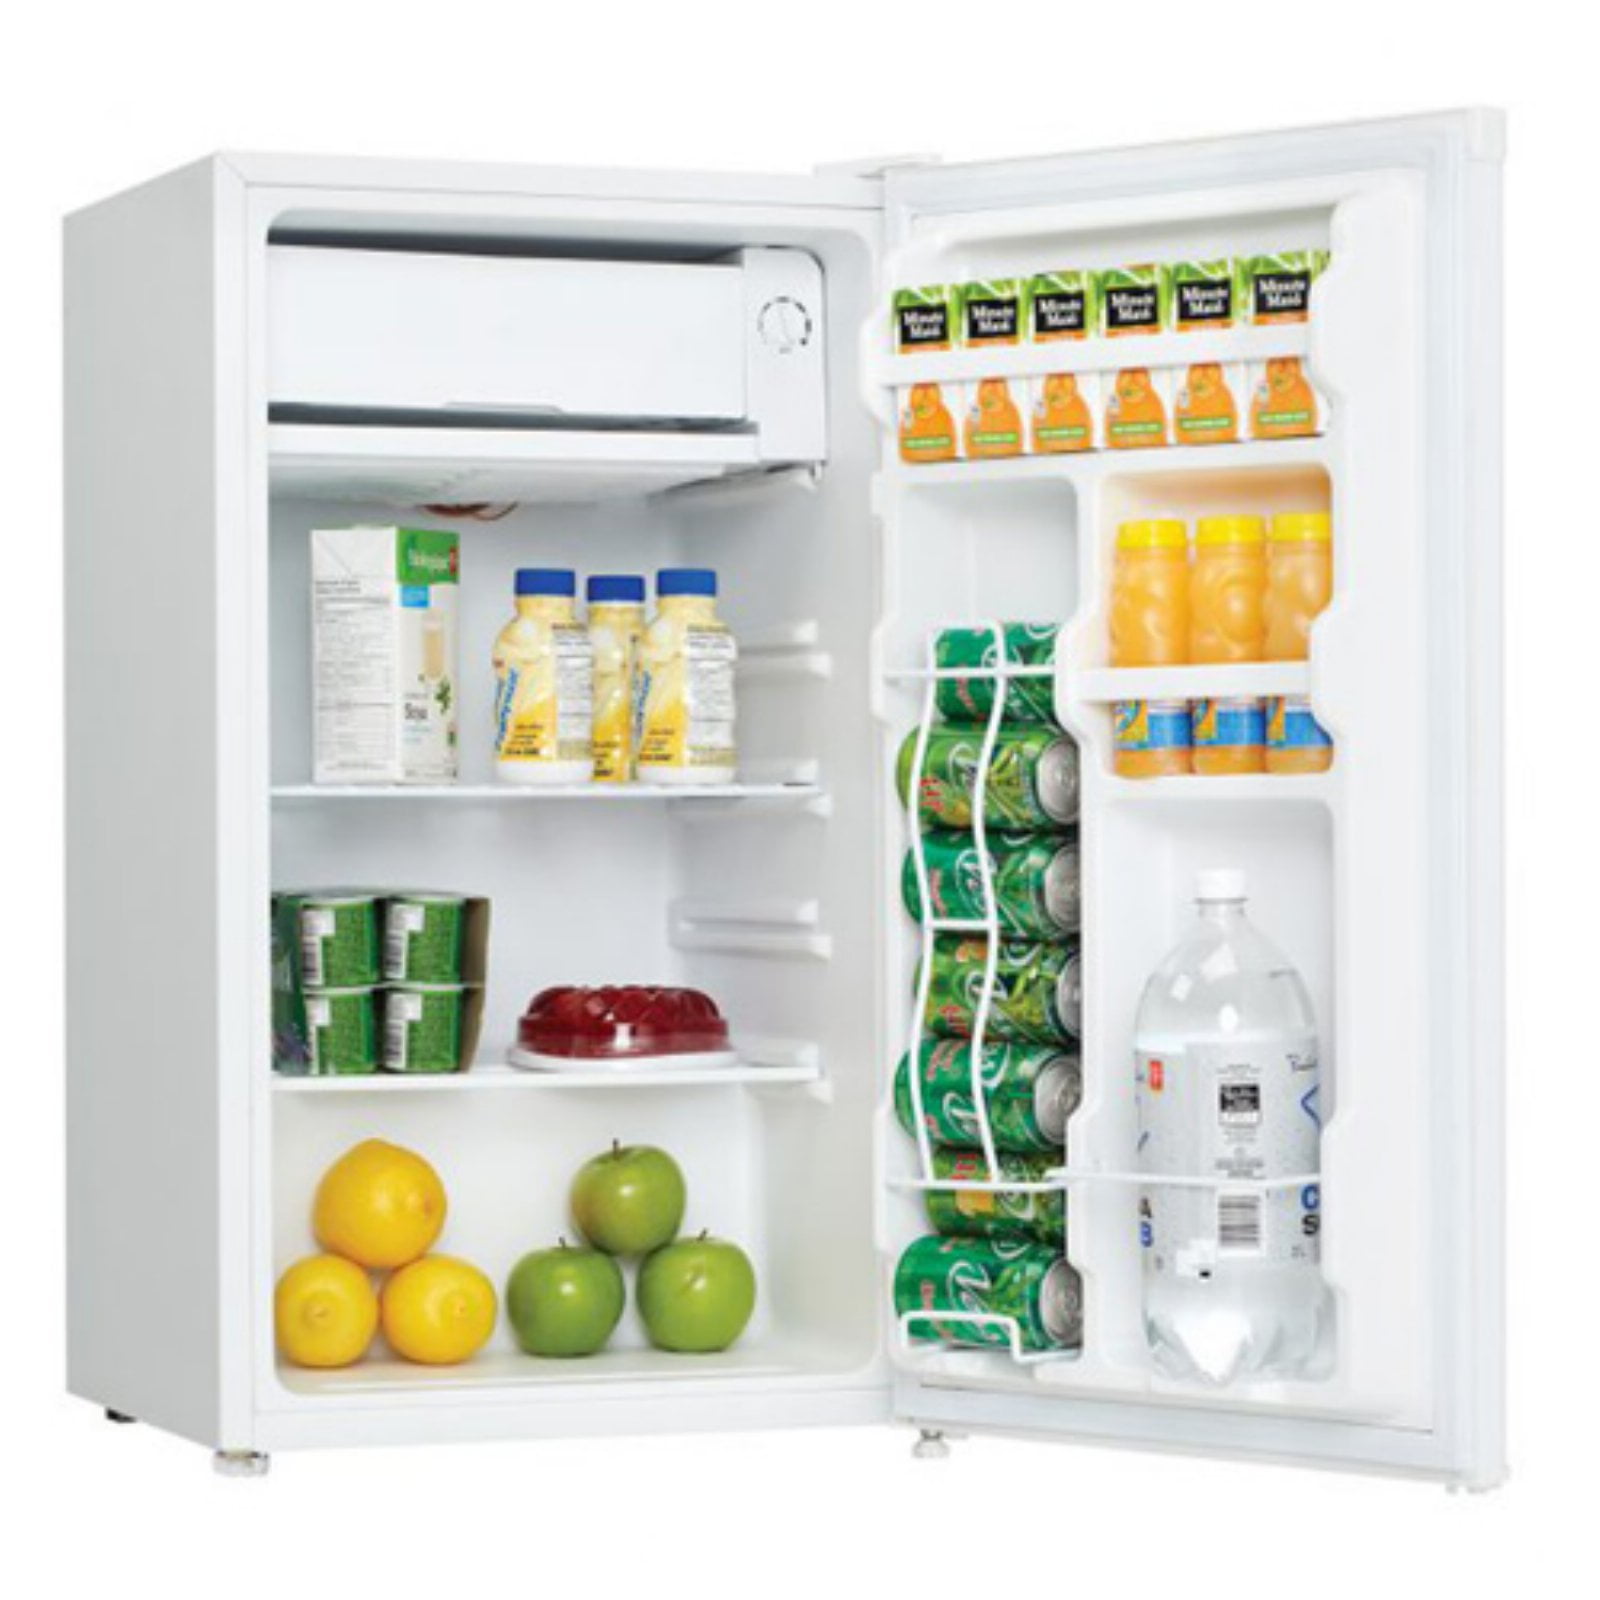 Newair 3.1 Cu. Ft. Compact Mini Refrigerator